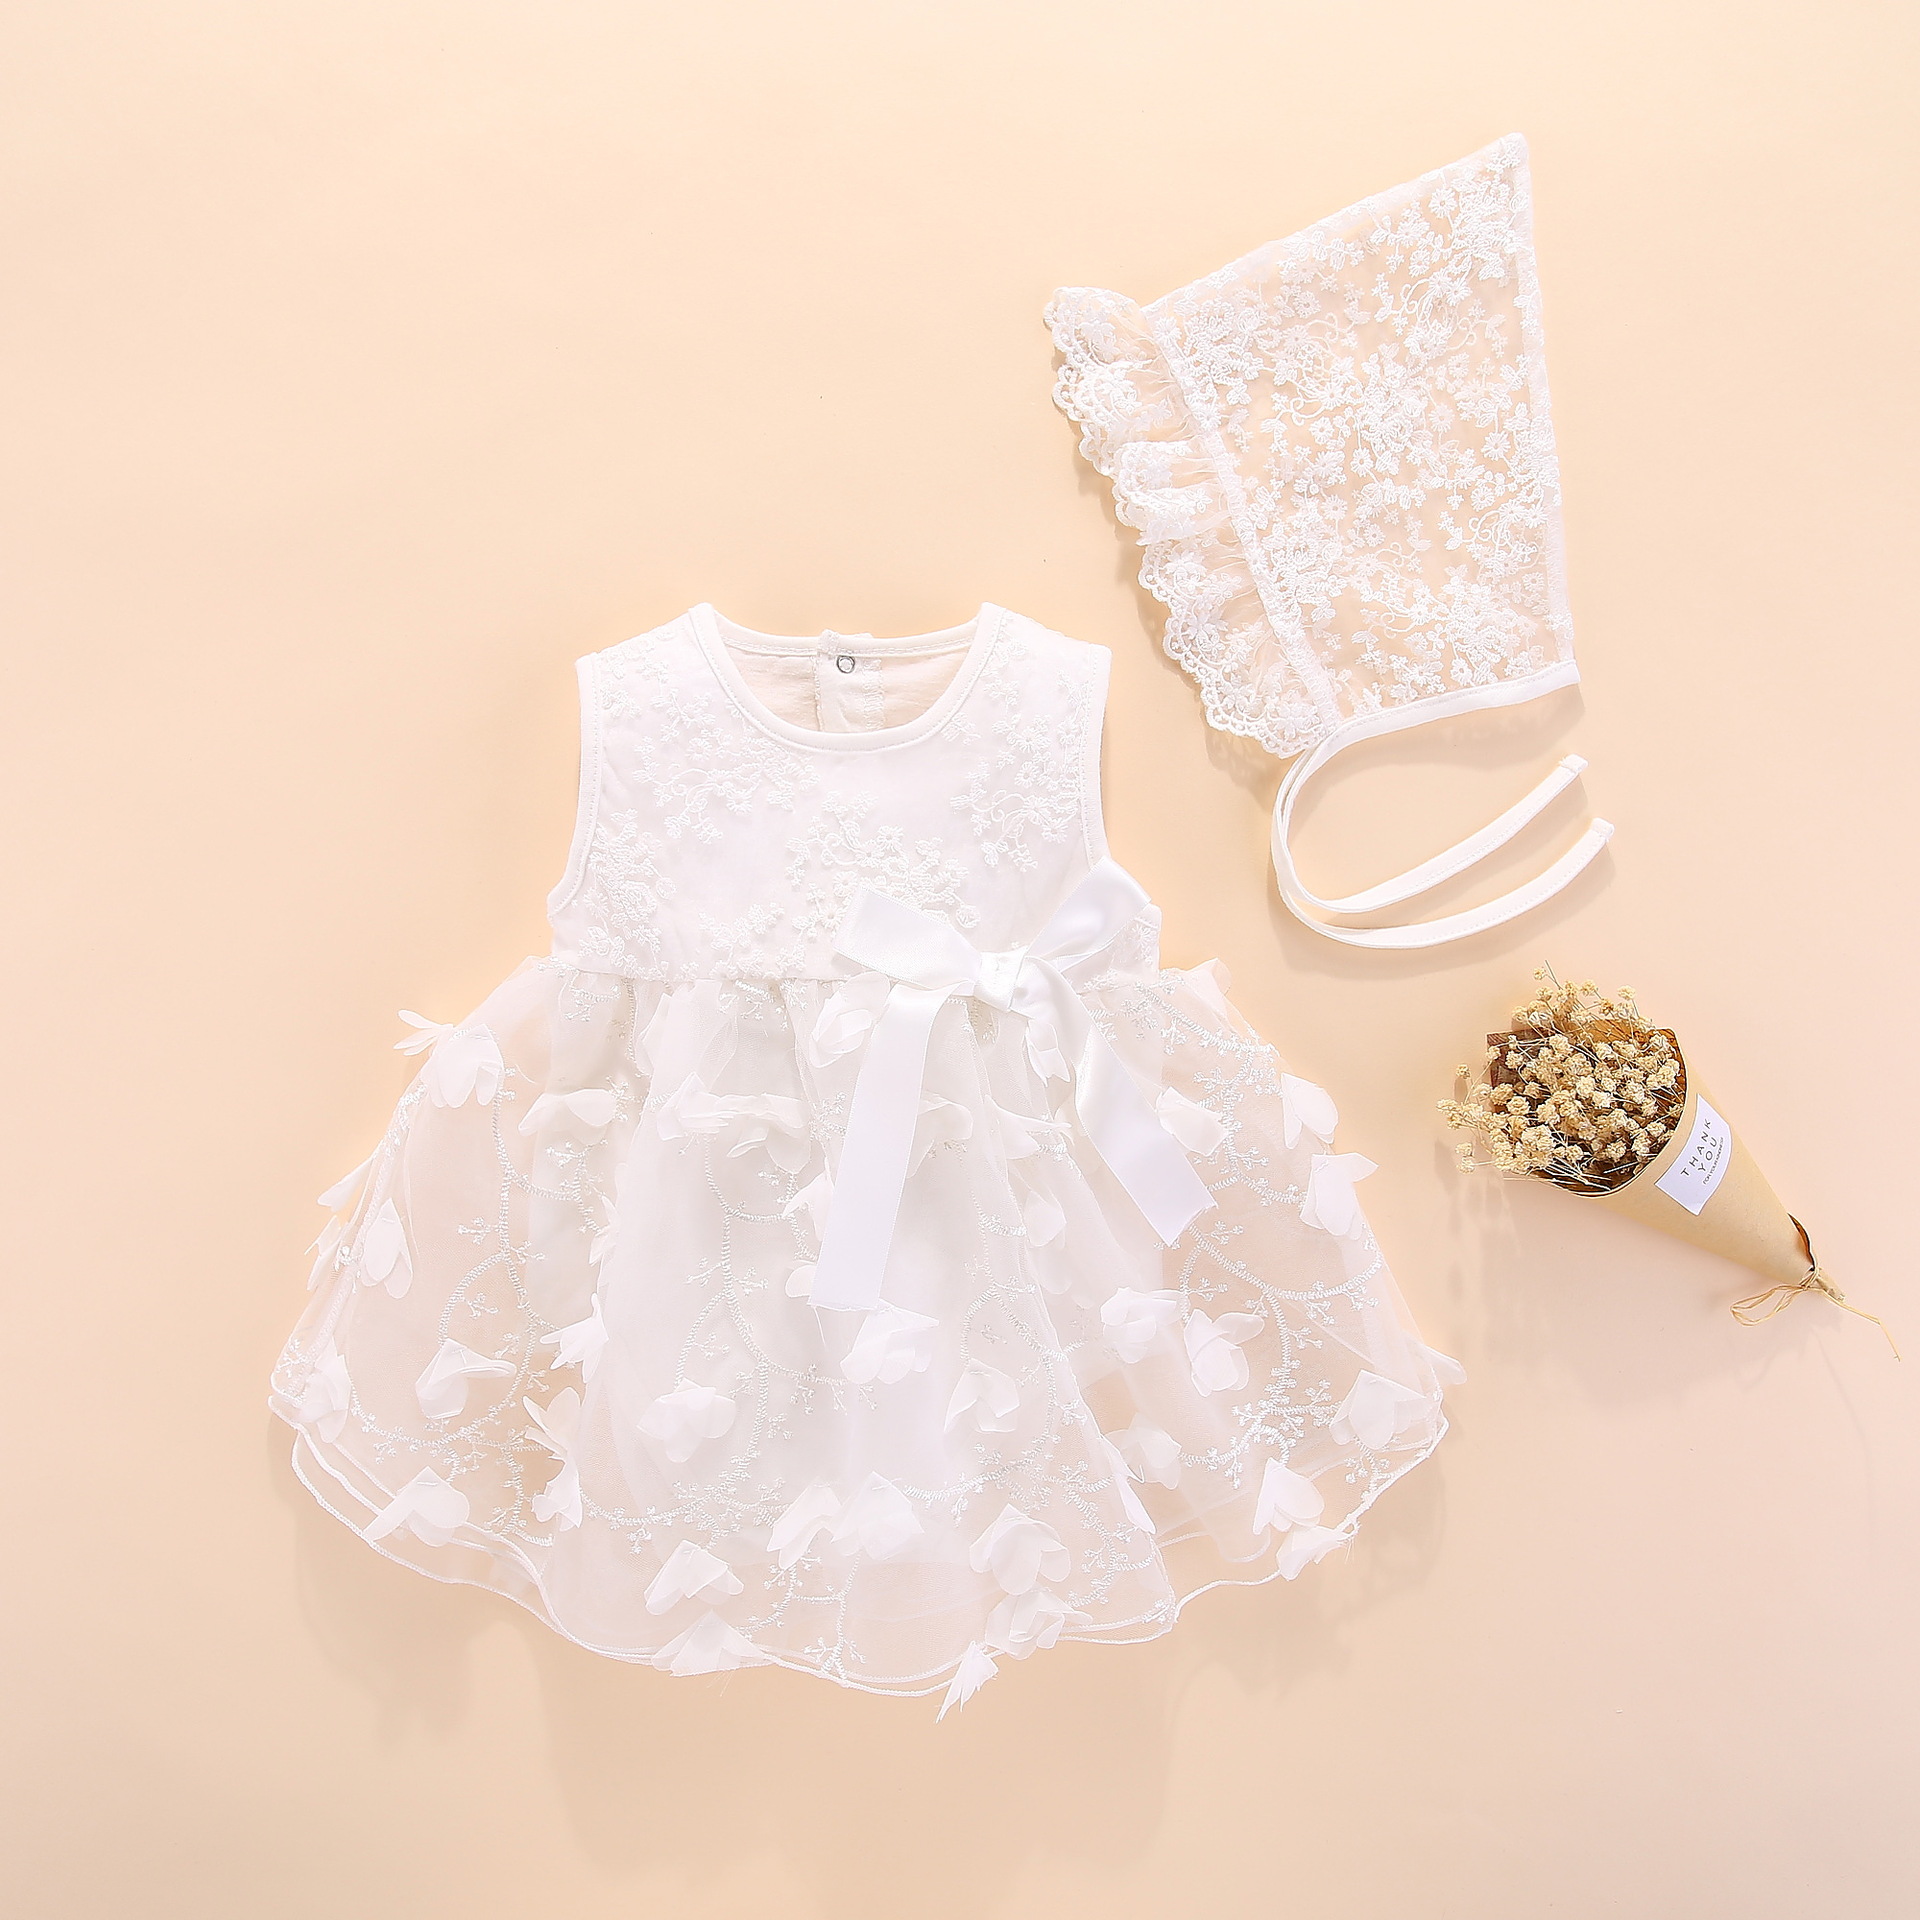 white baby dress 0 3 months